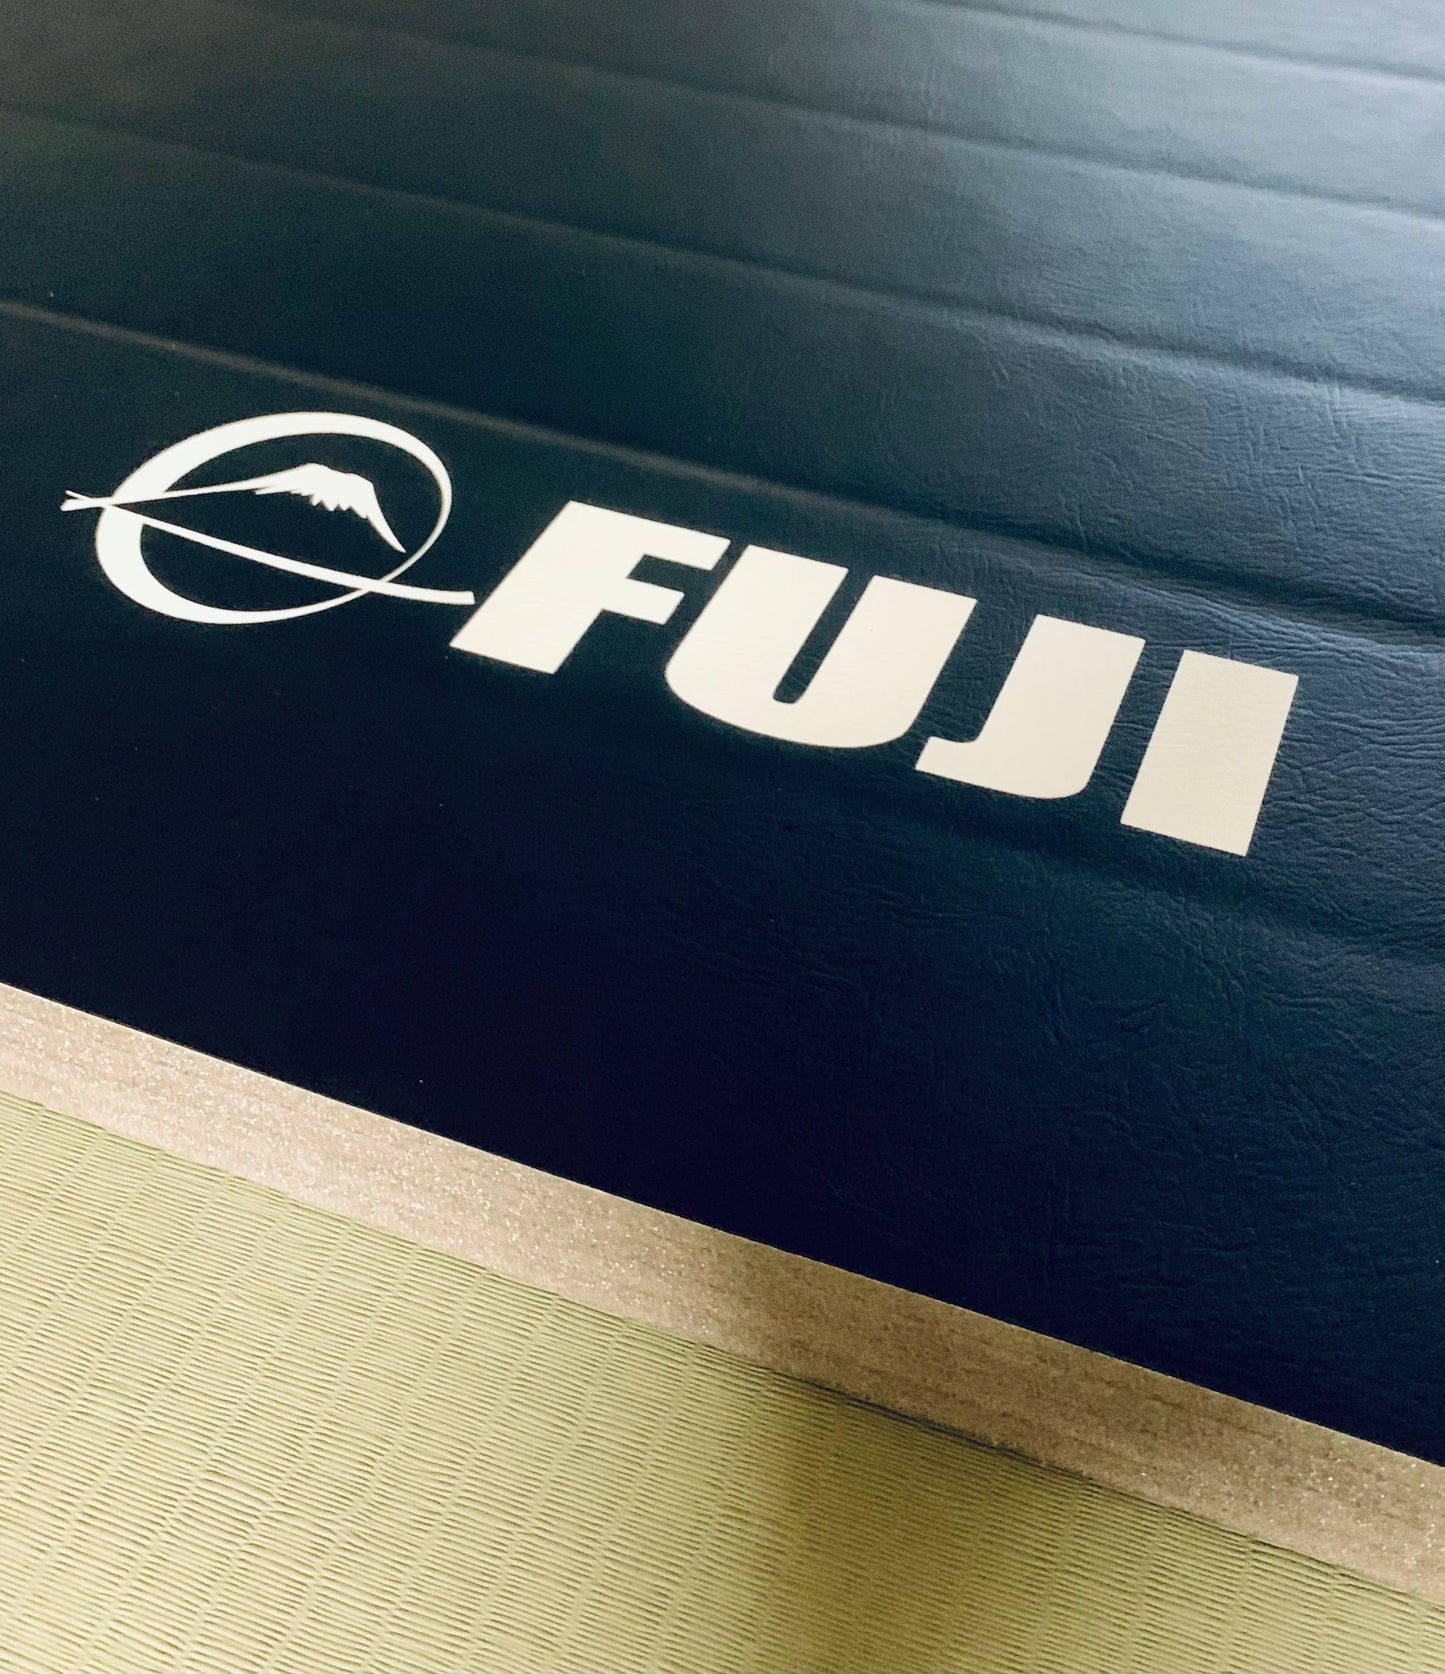 Fuji Home Mat System